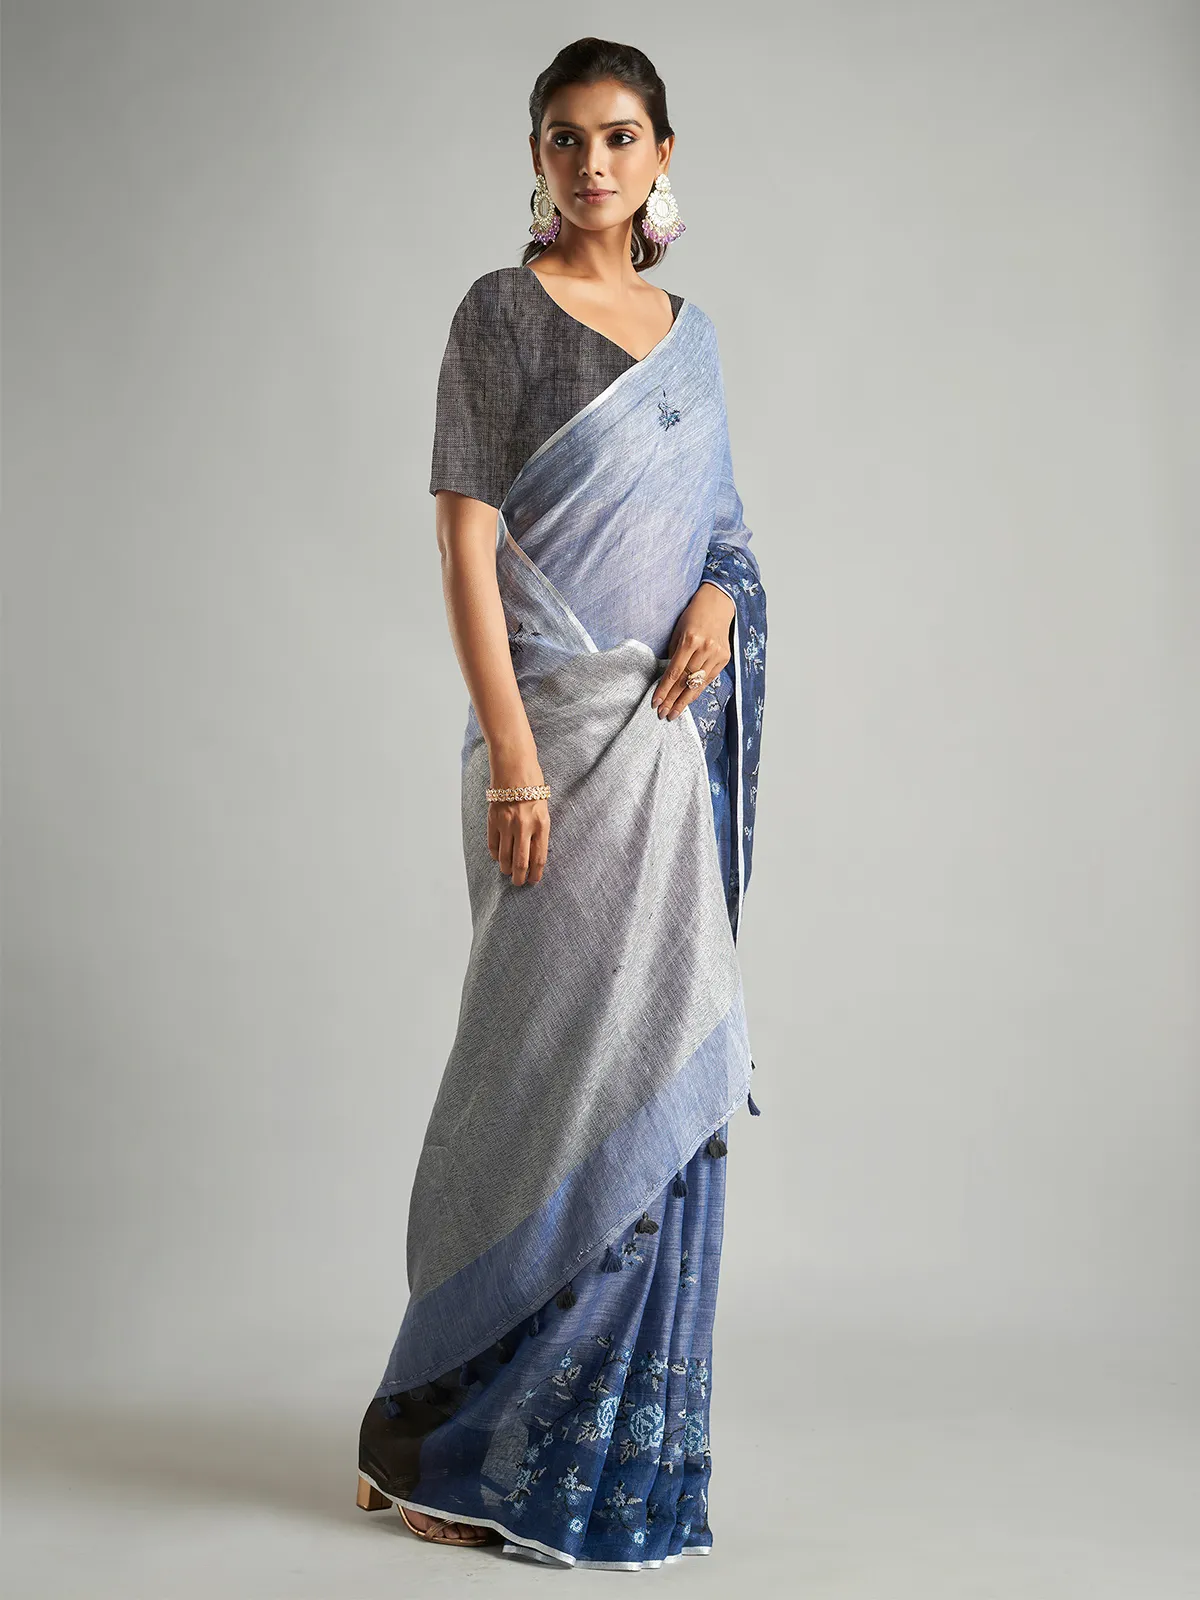 Light blue shaded cotton linen saree